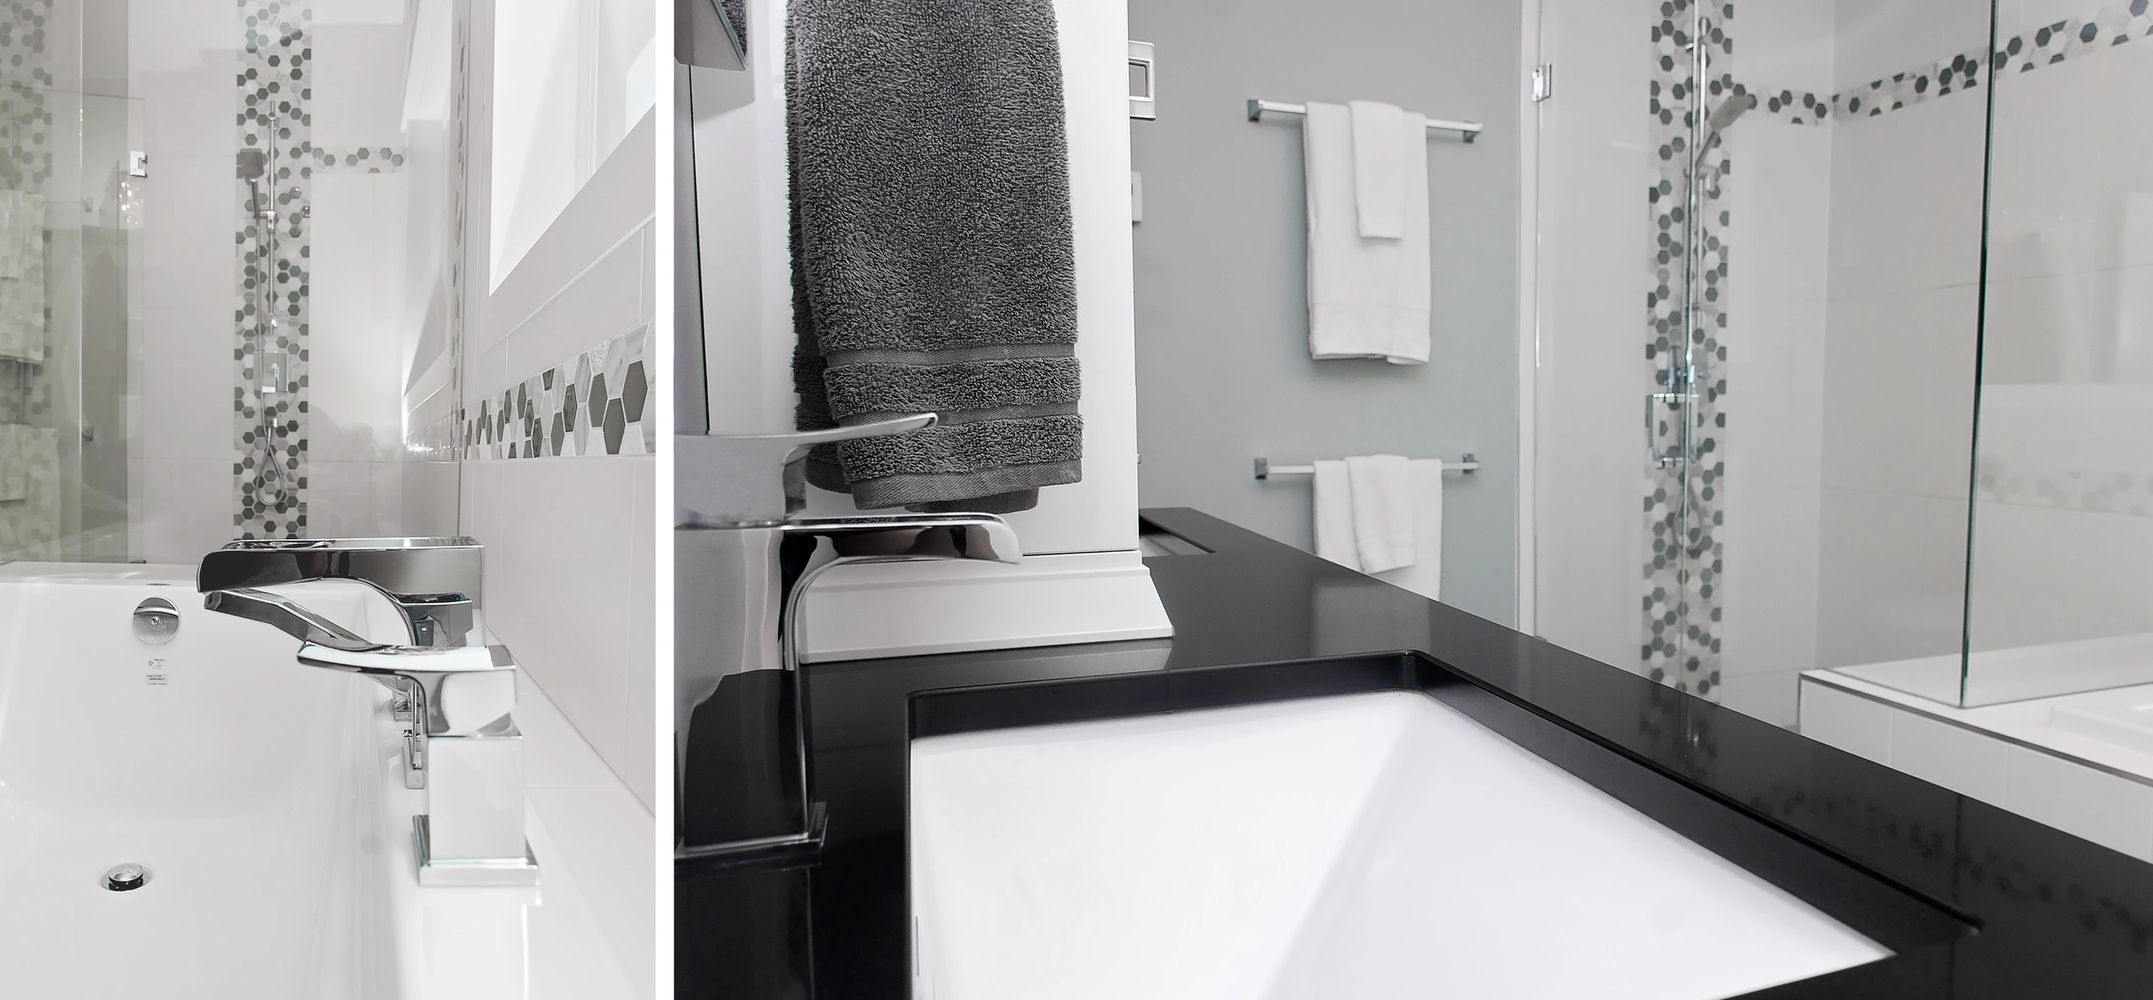 Custom en-suite bathroom, custom shower, drop in tub deck, under mount sink and faucet, shower trim